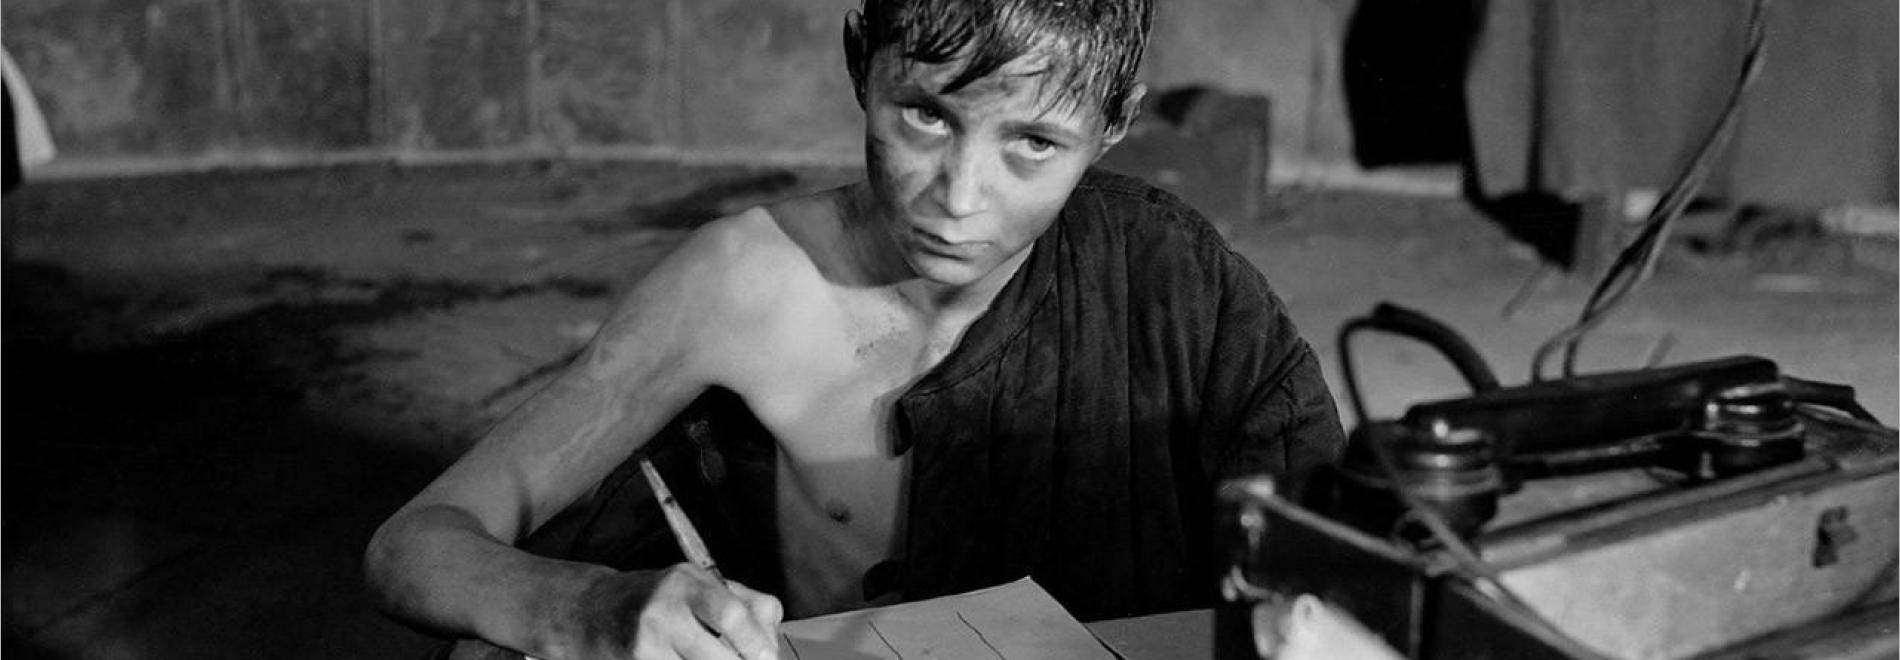 Ivanovo detstvo / La infancia de Iván (Andrei Tarkovski, 1962)